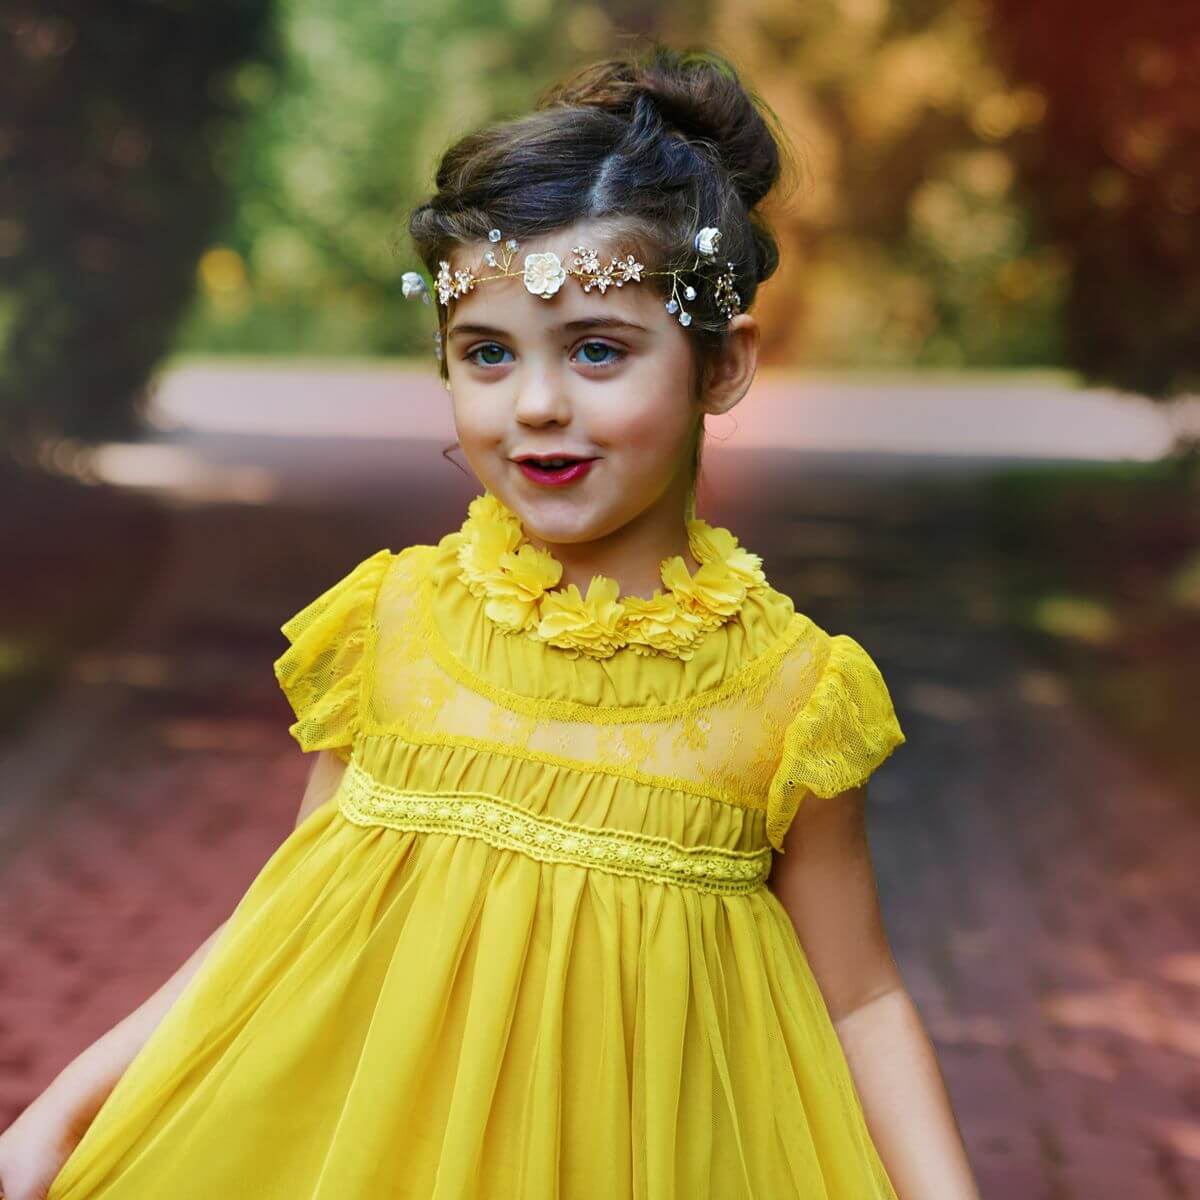 Bella Flora dress in mustard yellow